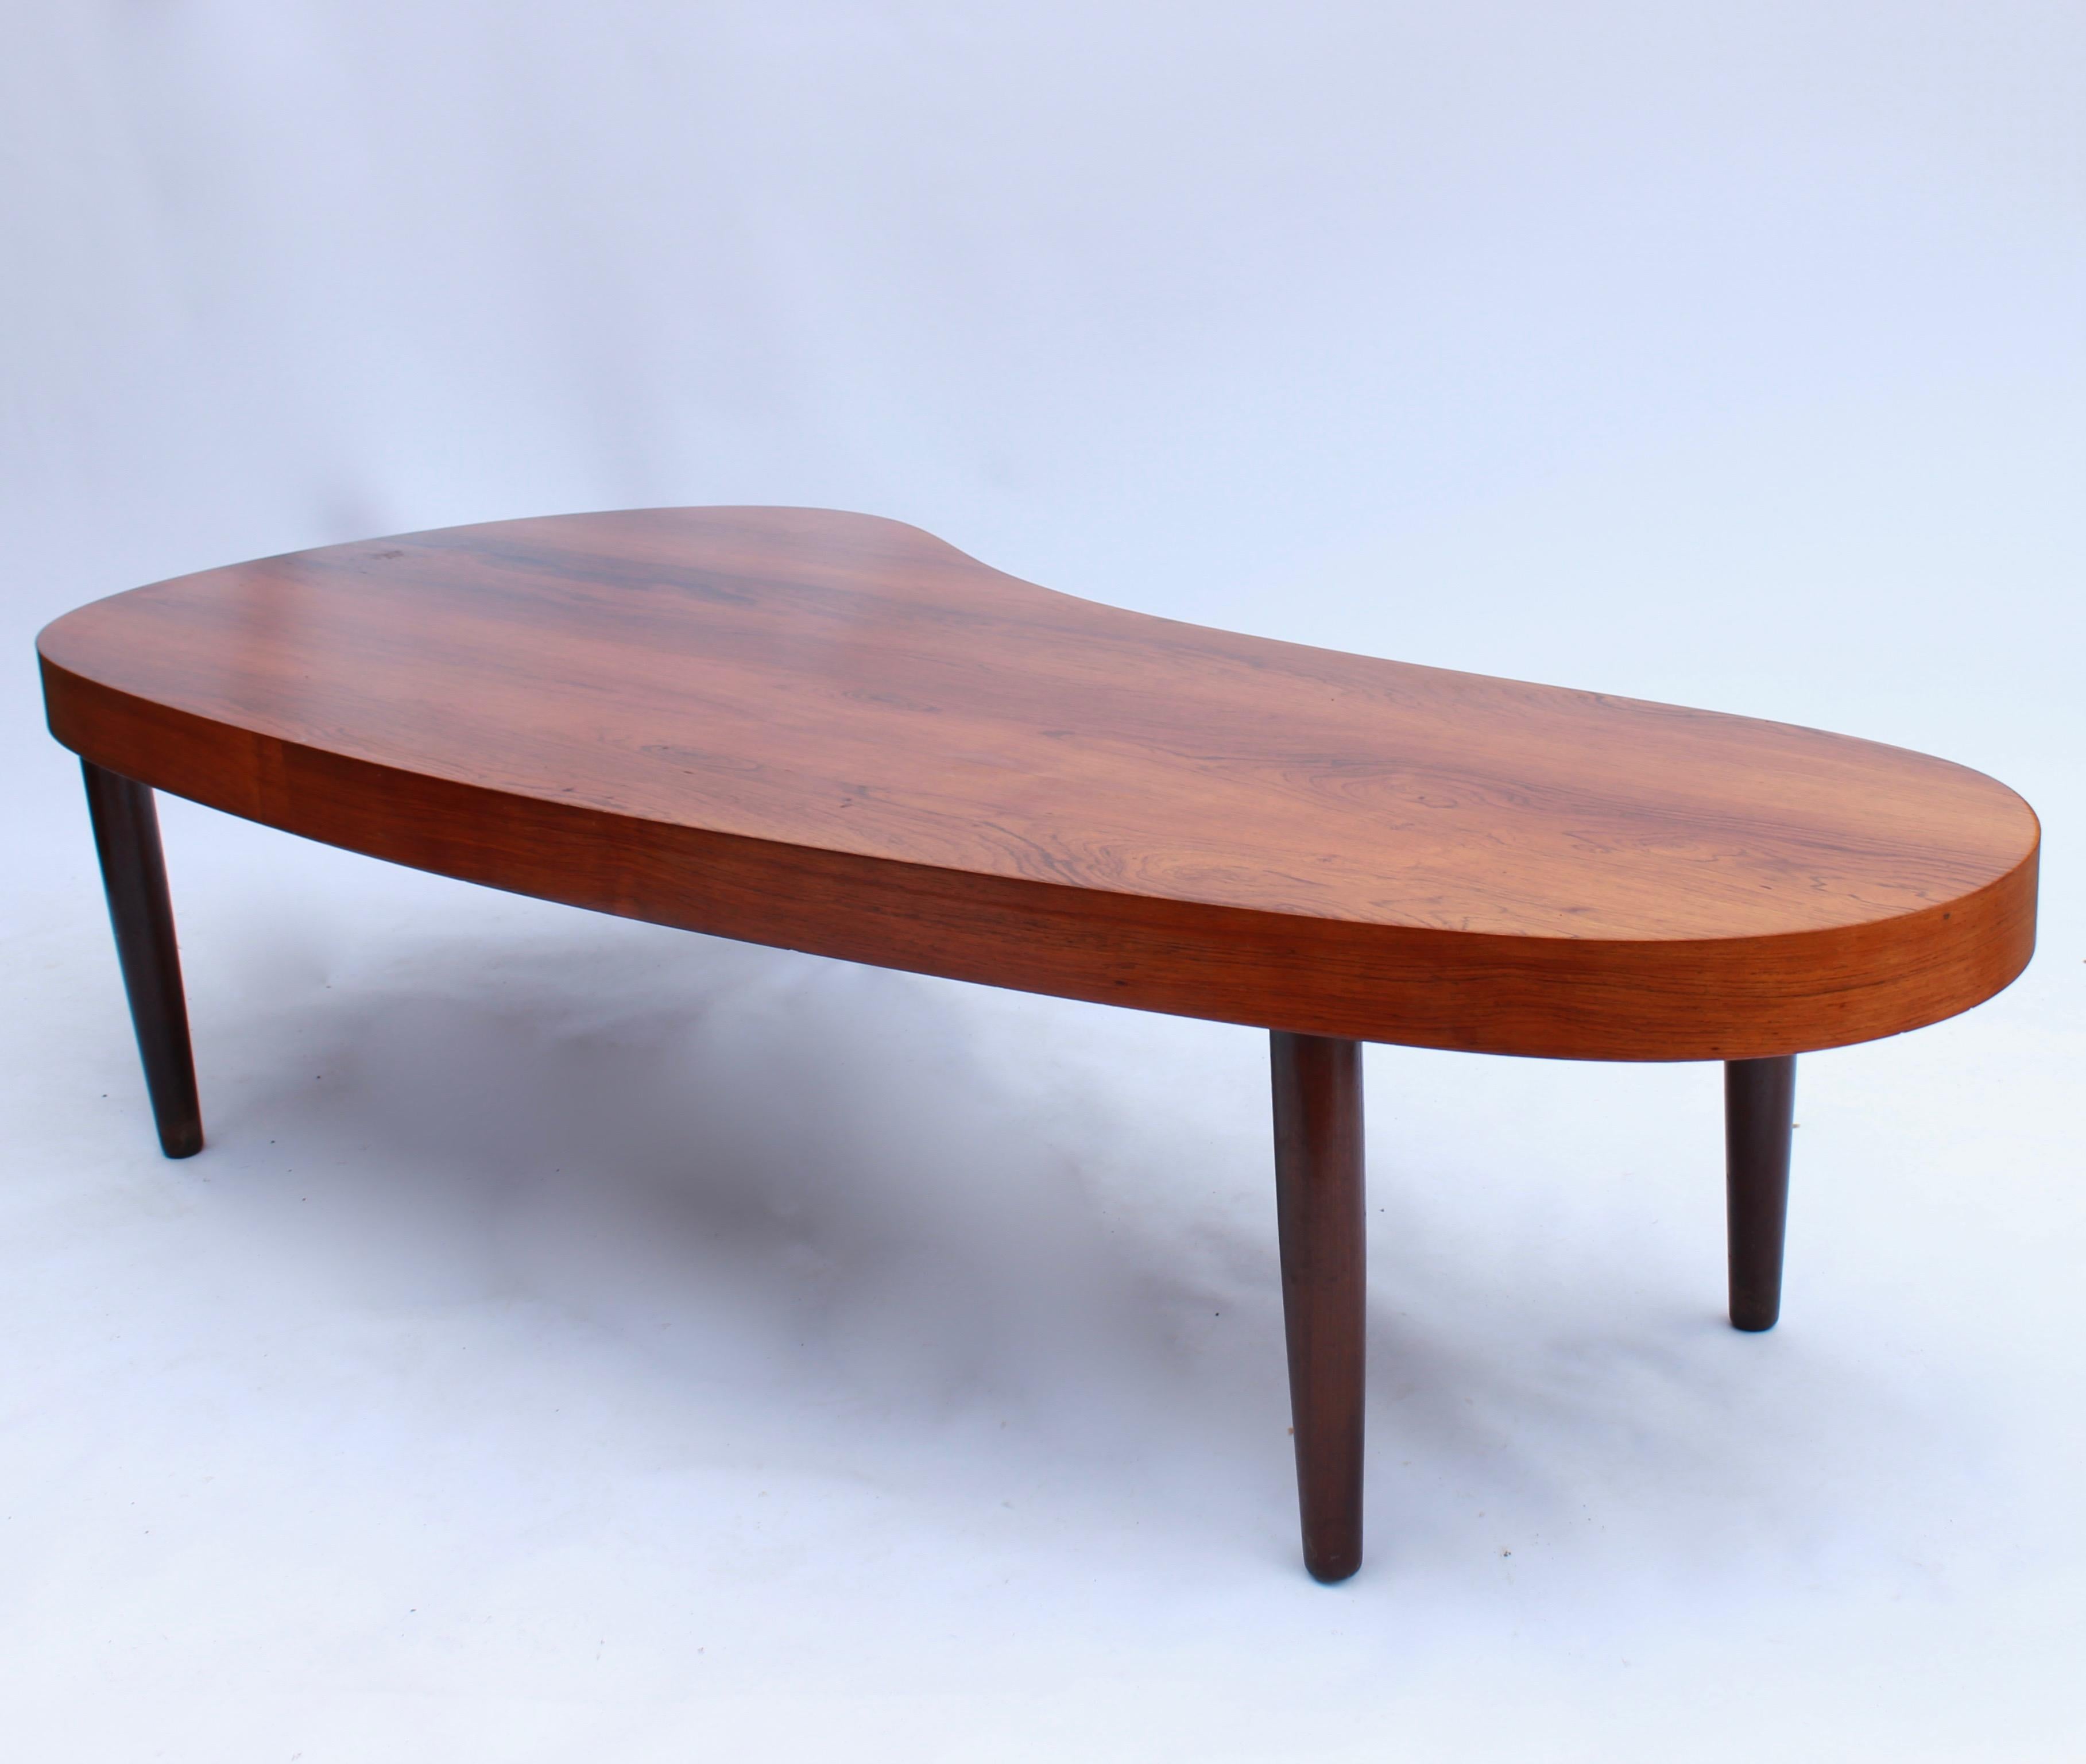 Scandinavian Modern Coffee Table in Rosewood of Danish Design and Danish Cabinetmaker, 1960s